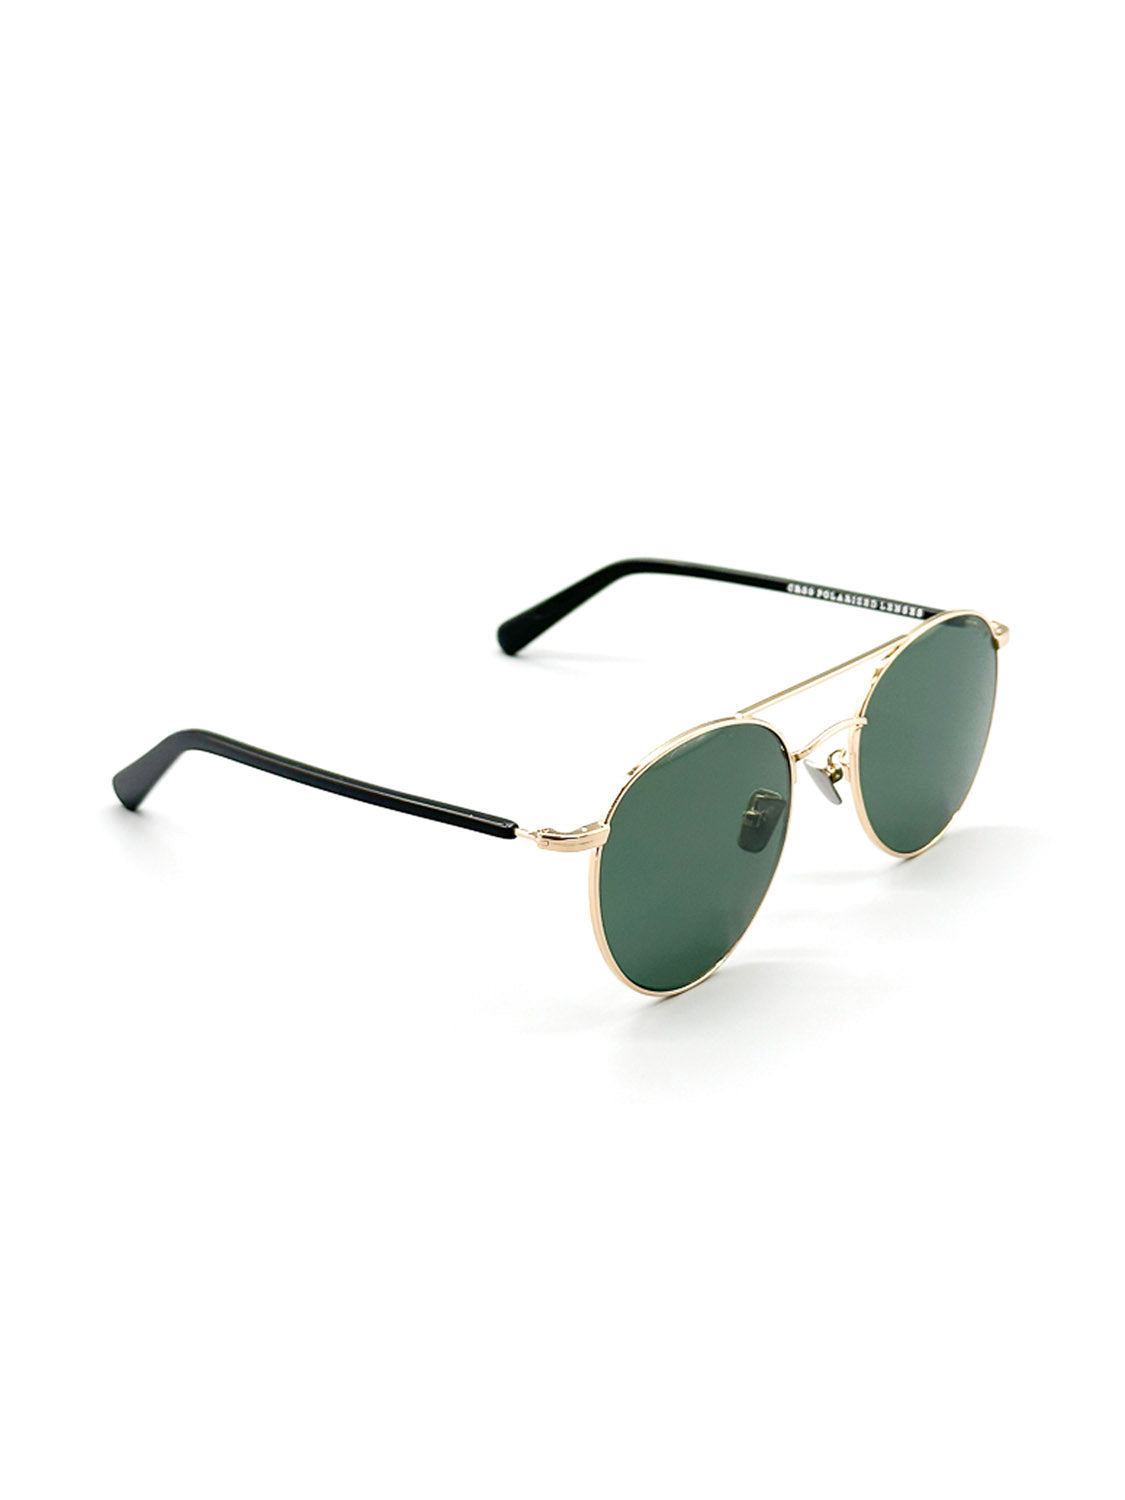 M433G - ID polarized sunglasses